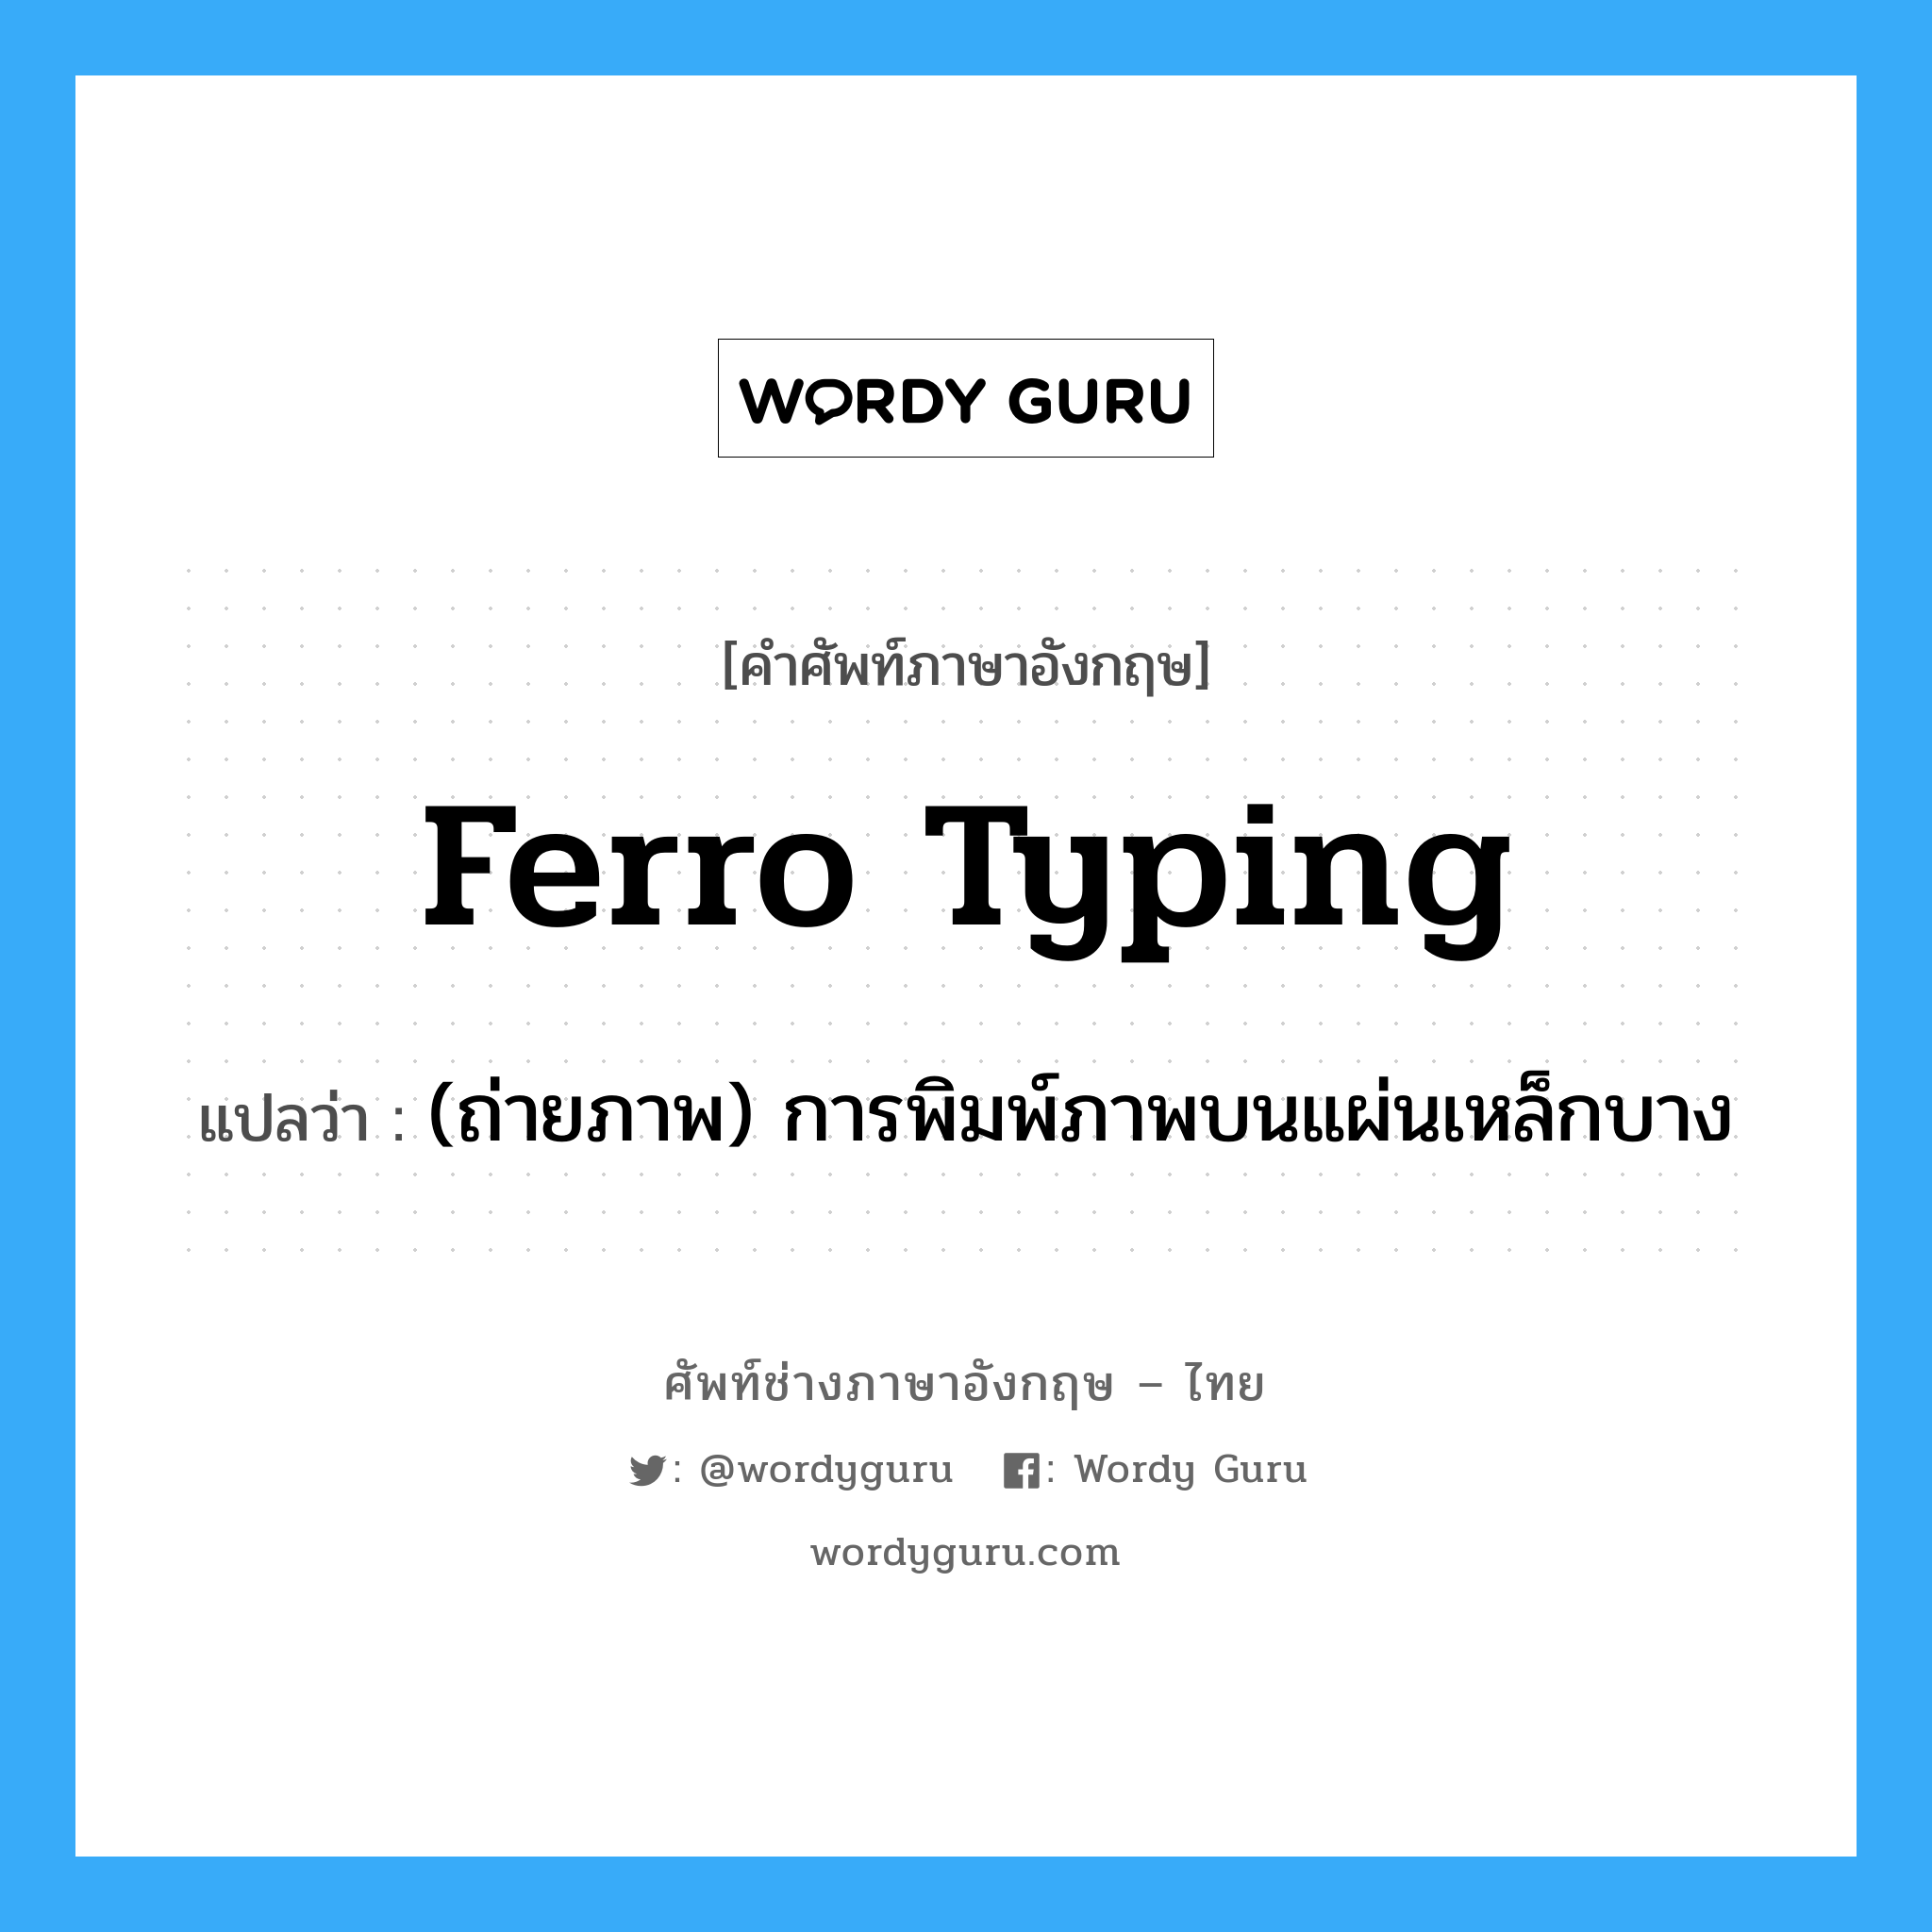 ferro typing แปลว่า?, คำศัพท์ช่างภาษาอังกฤษ - ไทย ferro typing คำศัพท์ภาษาอังกฤษ ferro typing แปลว่า (ถ่ายภาพ) การพิมพ์ภาพบนแผ่นเหล็กบาง